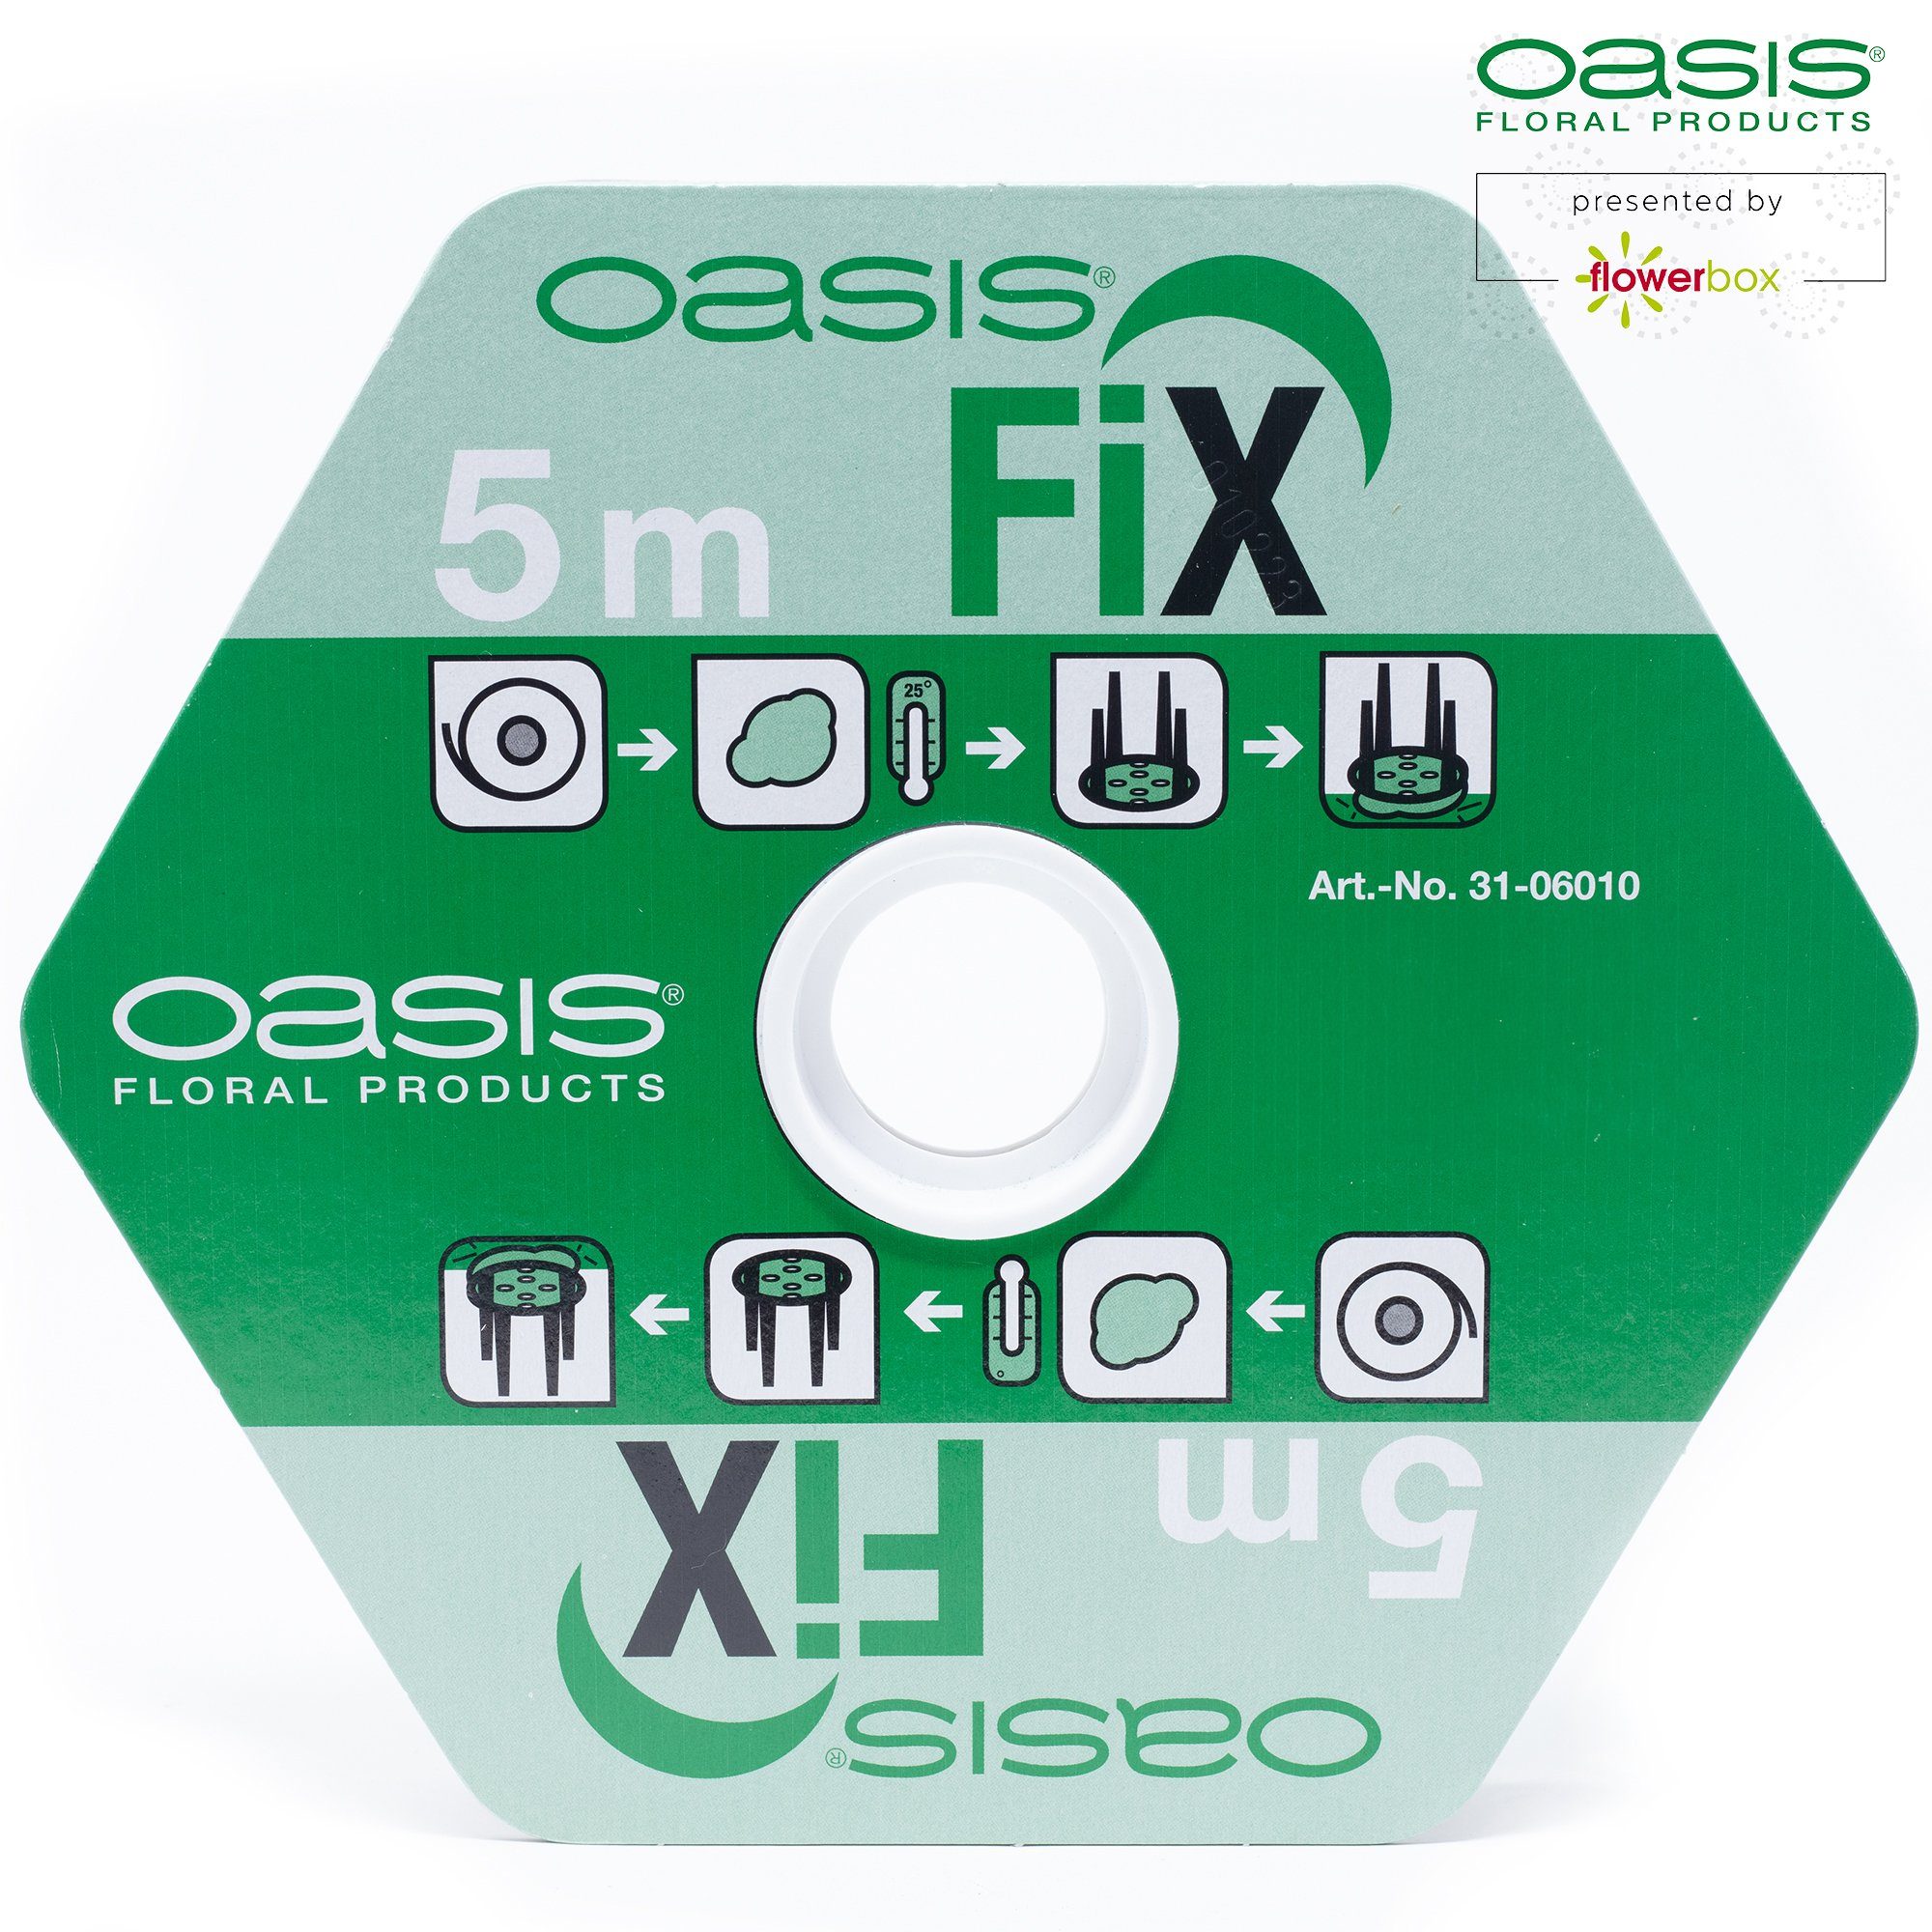 Oasis Klebeband - 5m Fix grün x OASIS® 10mm - Klebemasse